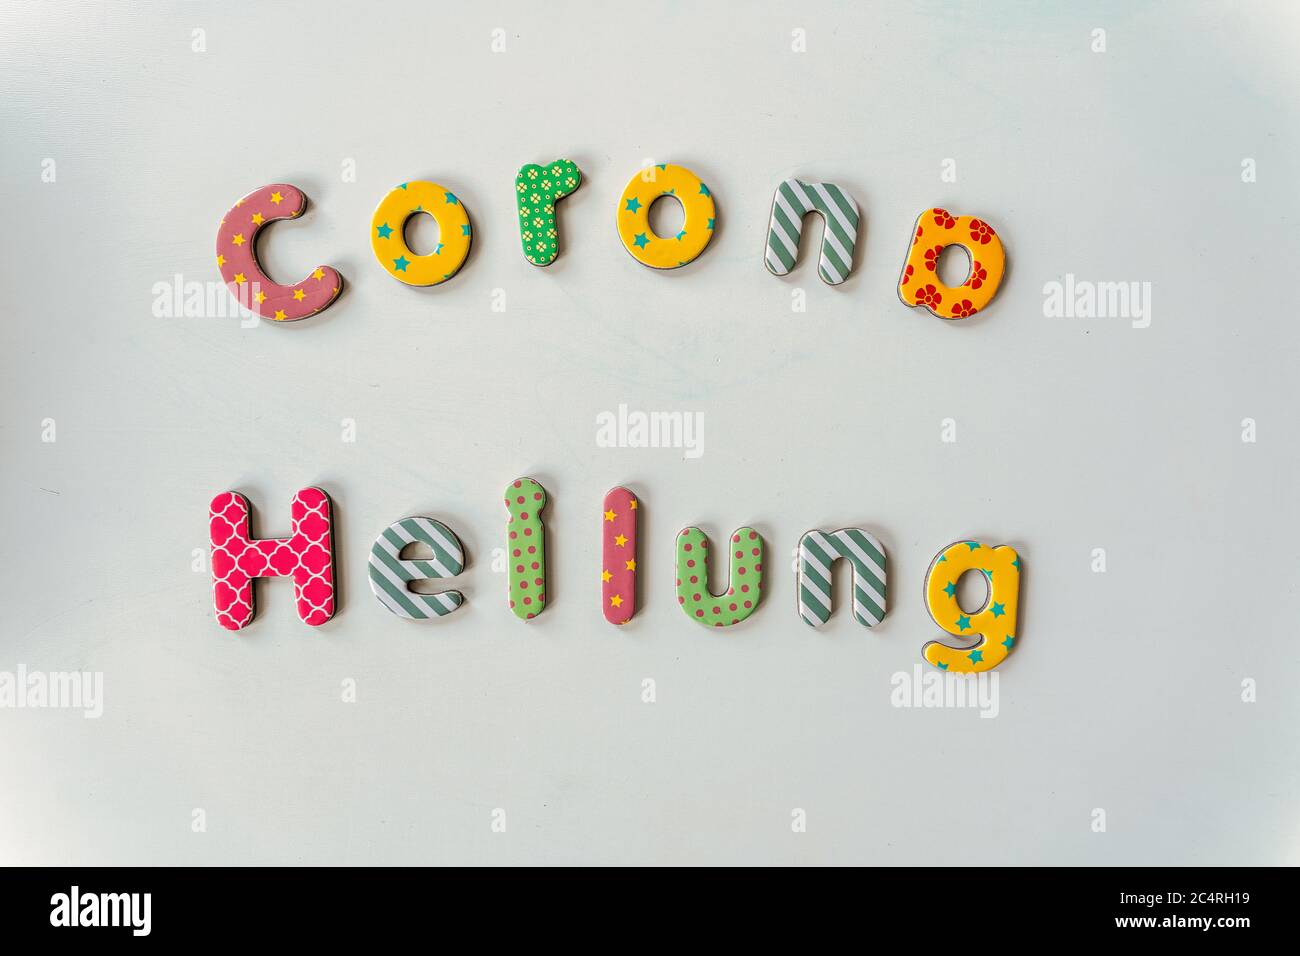 Corona Heilung - corona healing, typography in german letters. Stock Photo